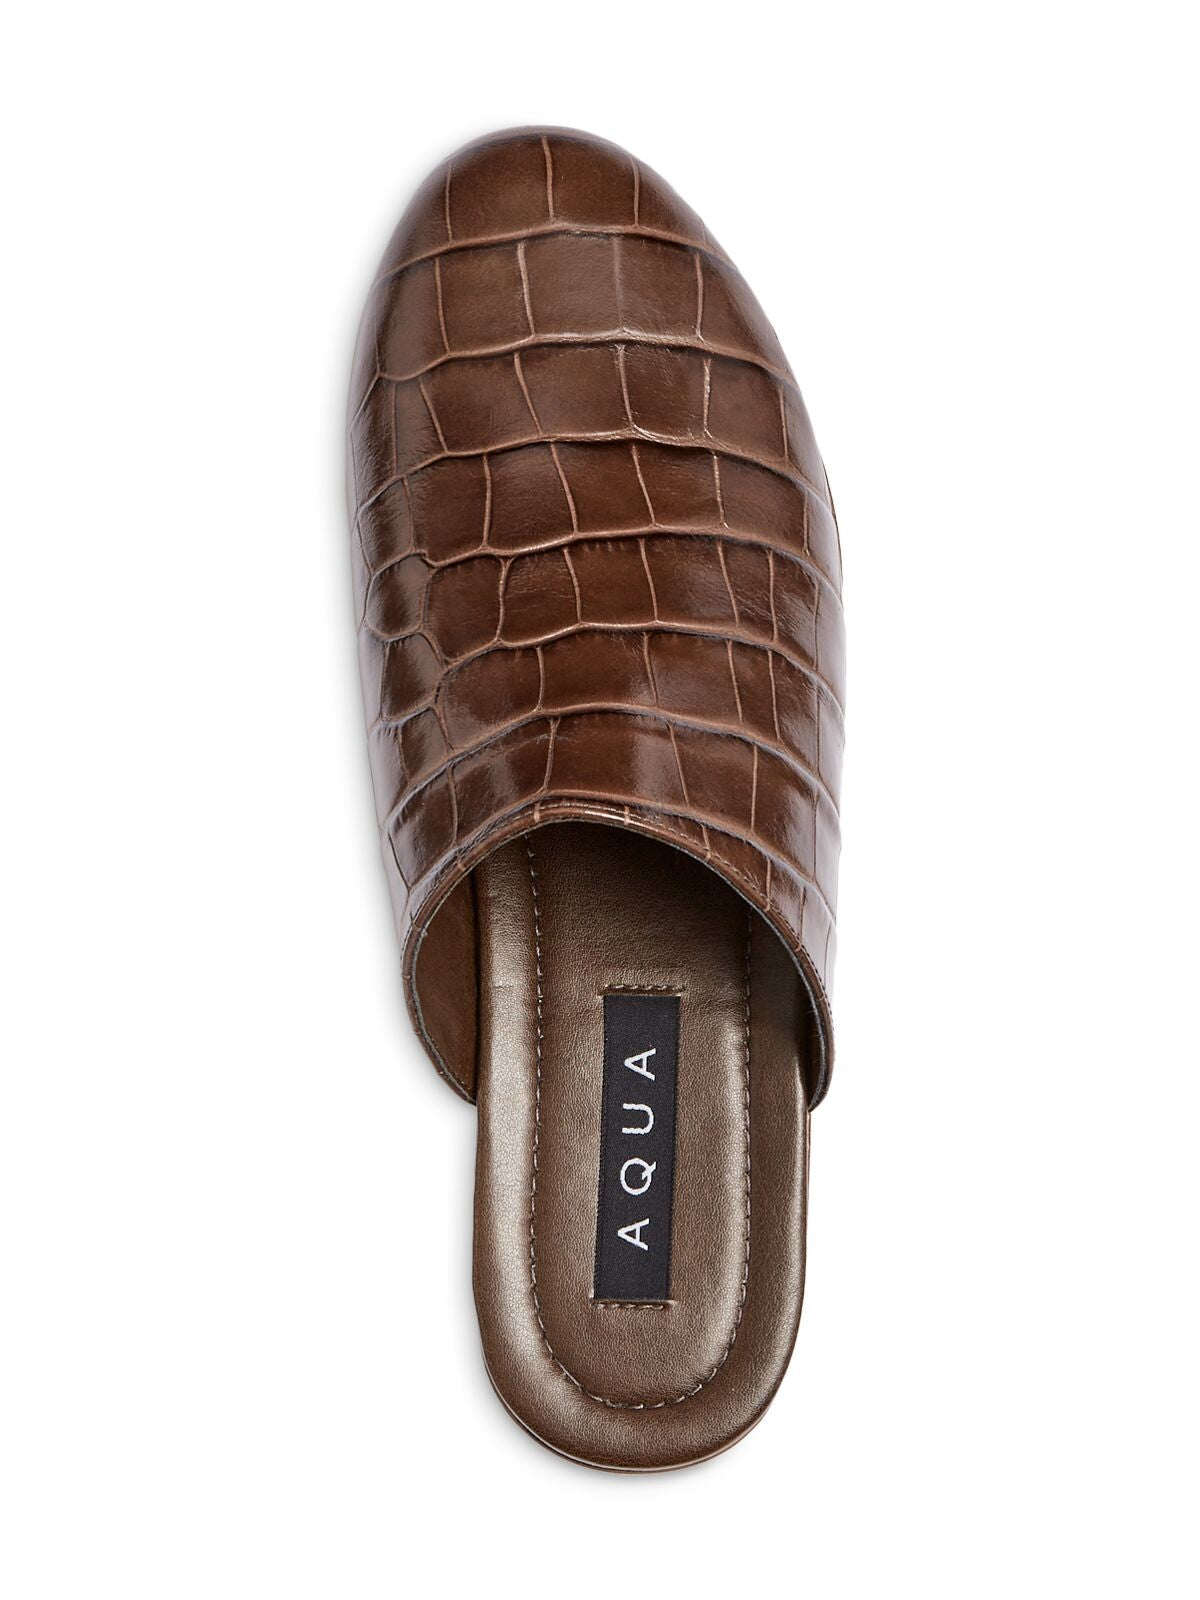 AQUA Womens Brown Crocodile Comfort Round Toe Block Heel Slip On Leather Clogs Shoes 7.5 B